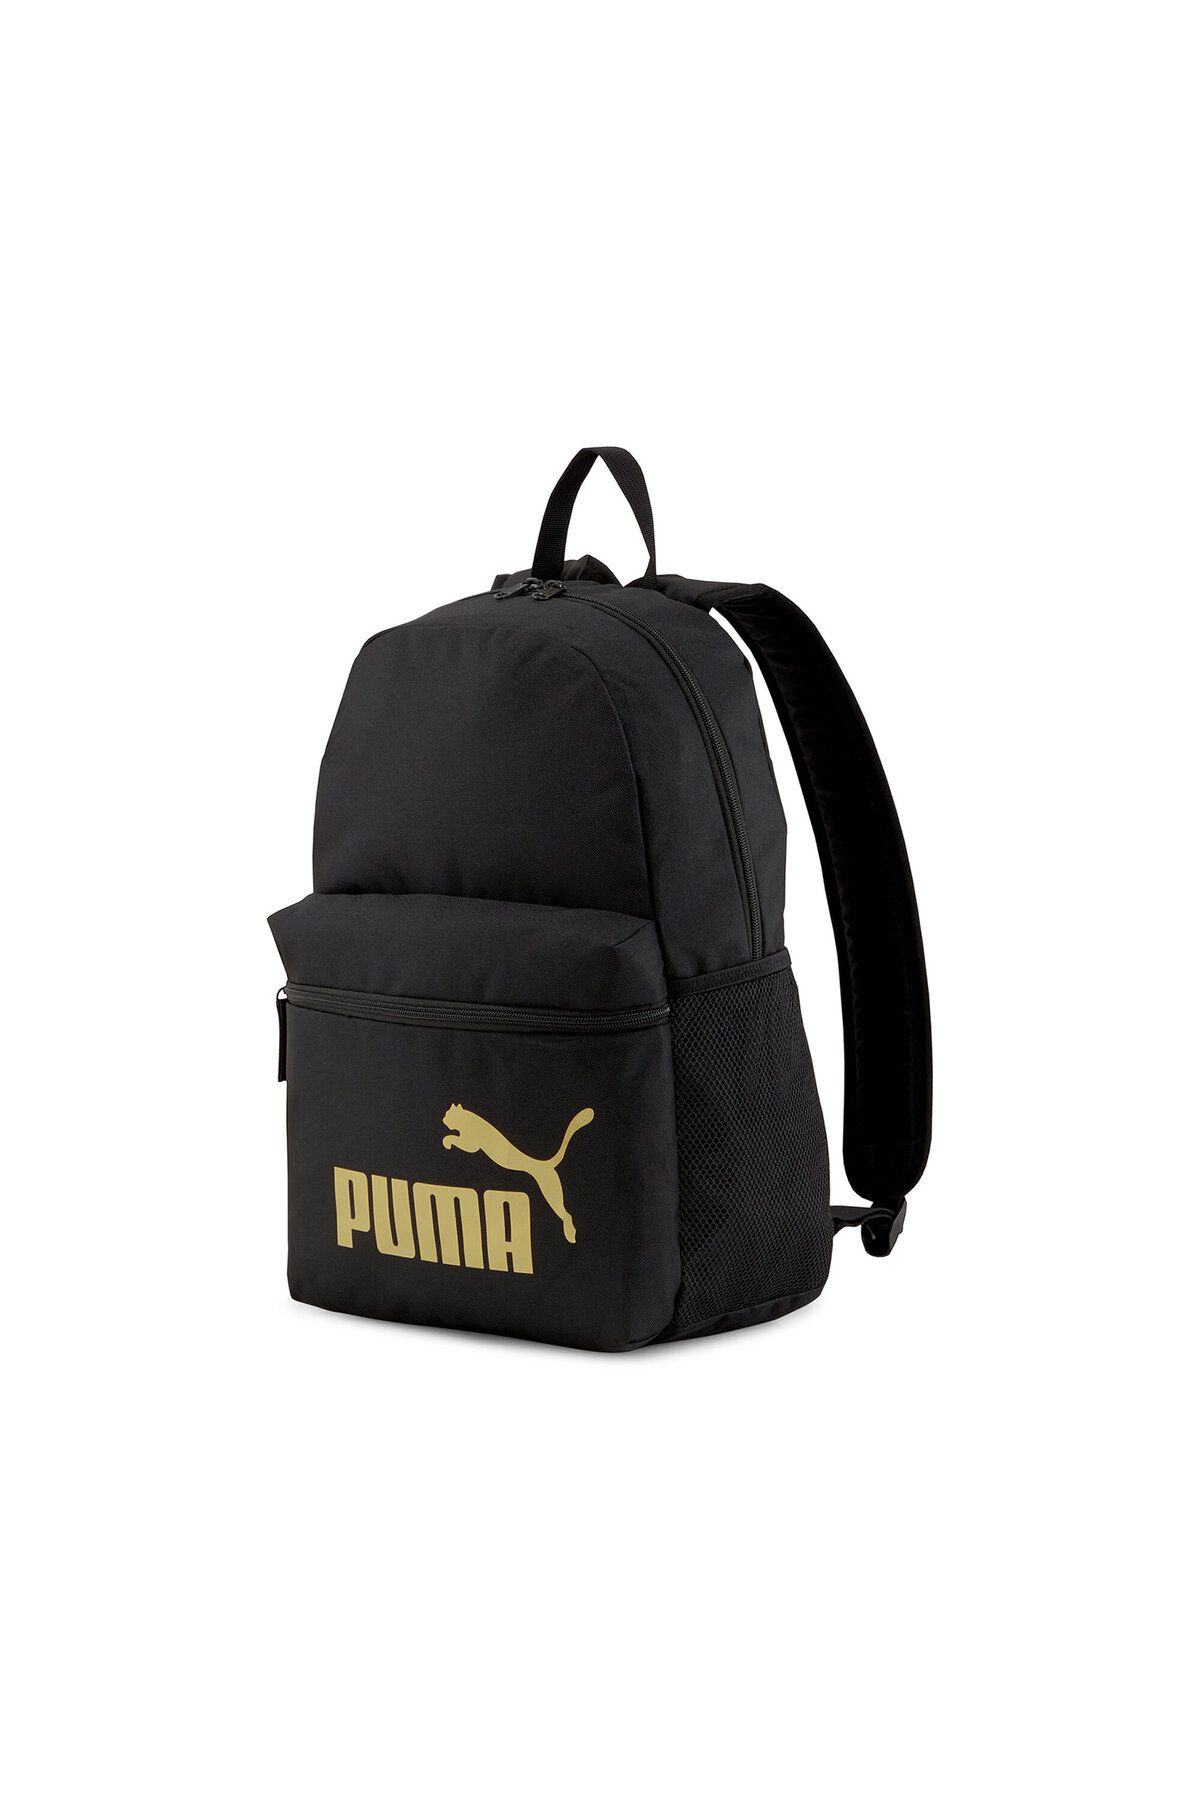 Puma Phase Backpack Sırt Çantası 7548749 Siyah